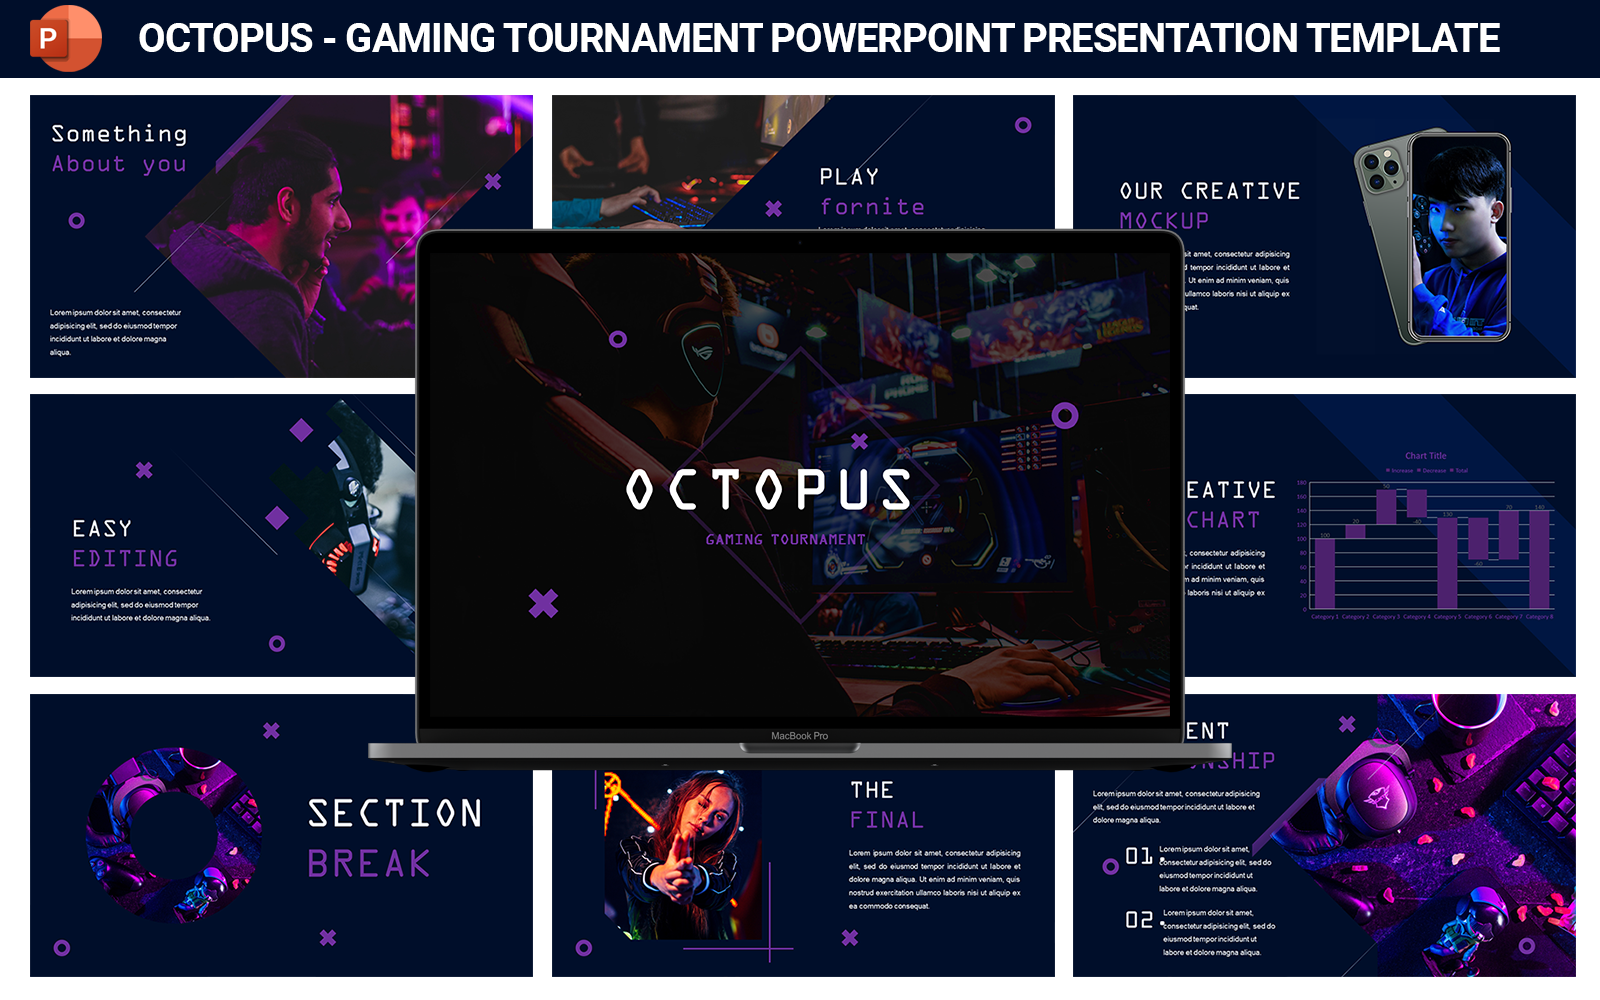 Octopus - Gaming Tournament Presentation Template